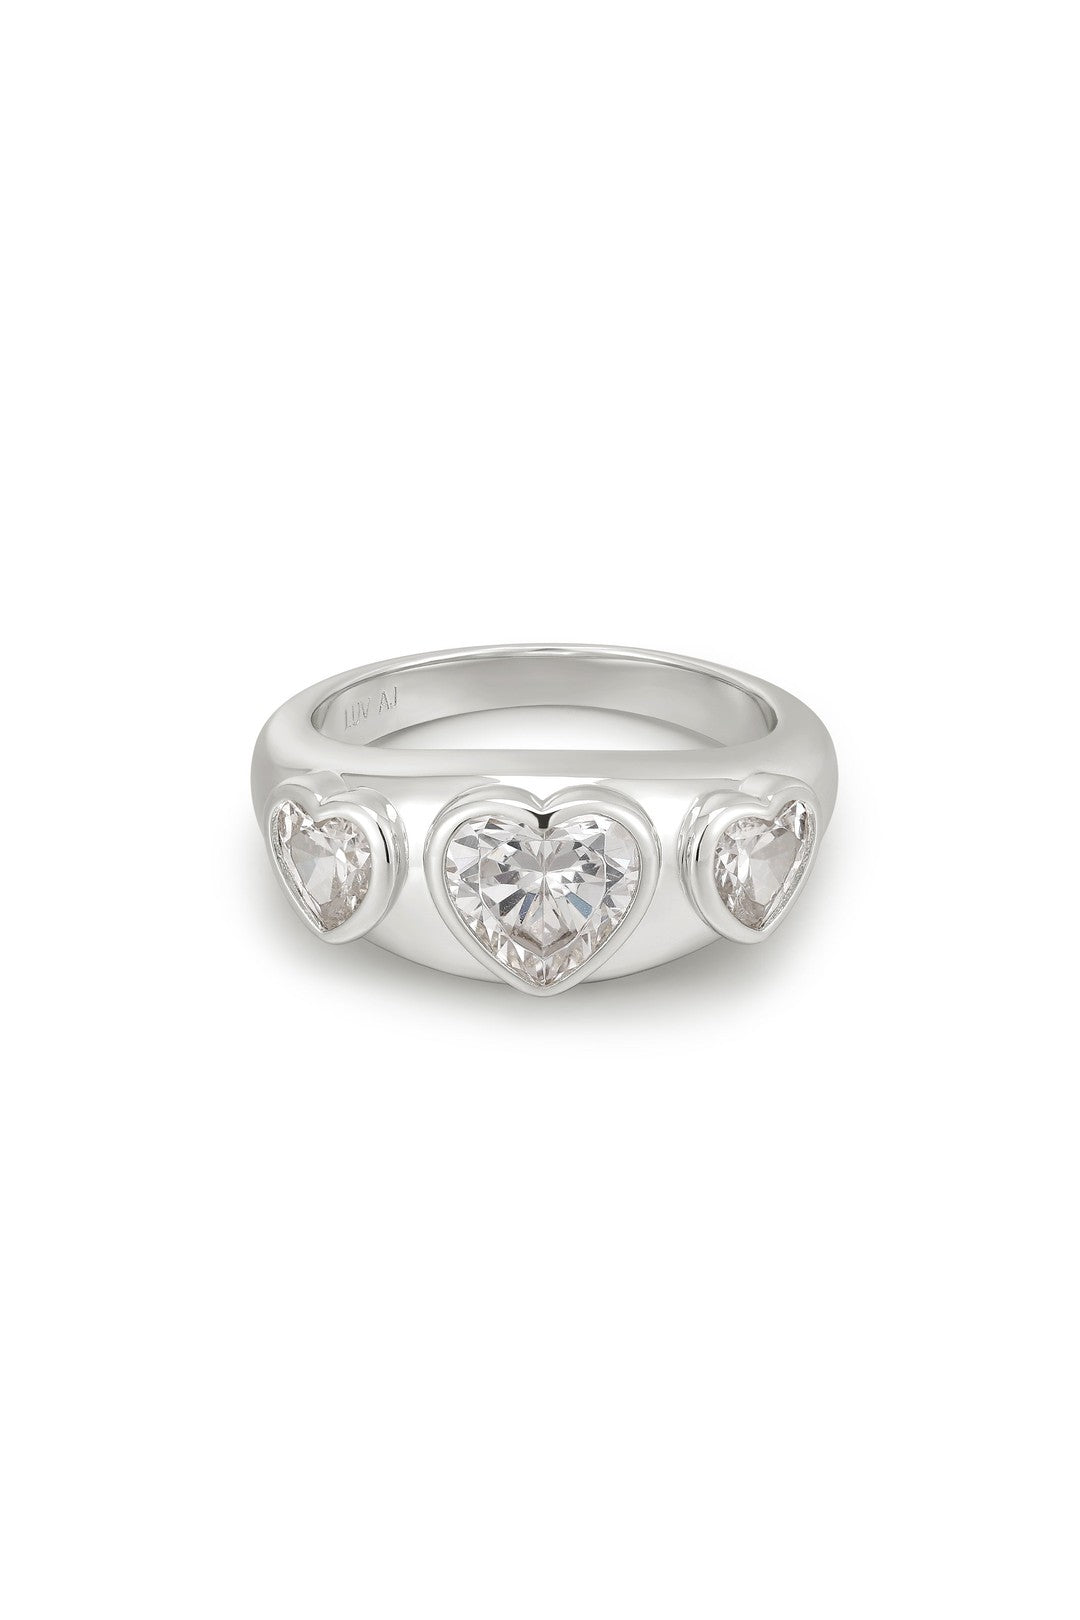 The Bezel heart signet ring, silver